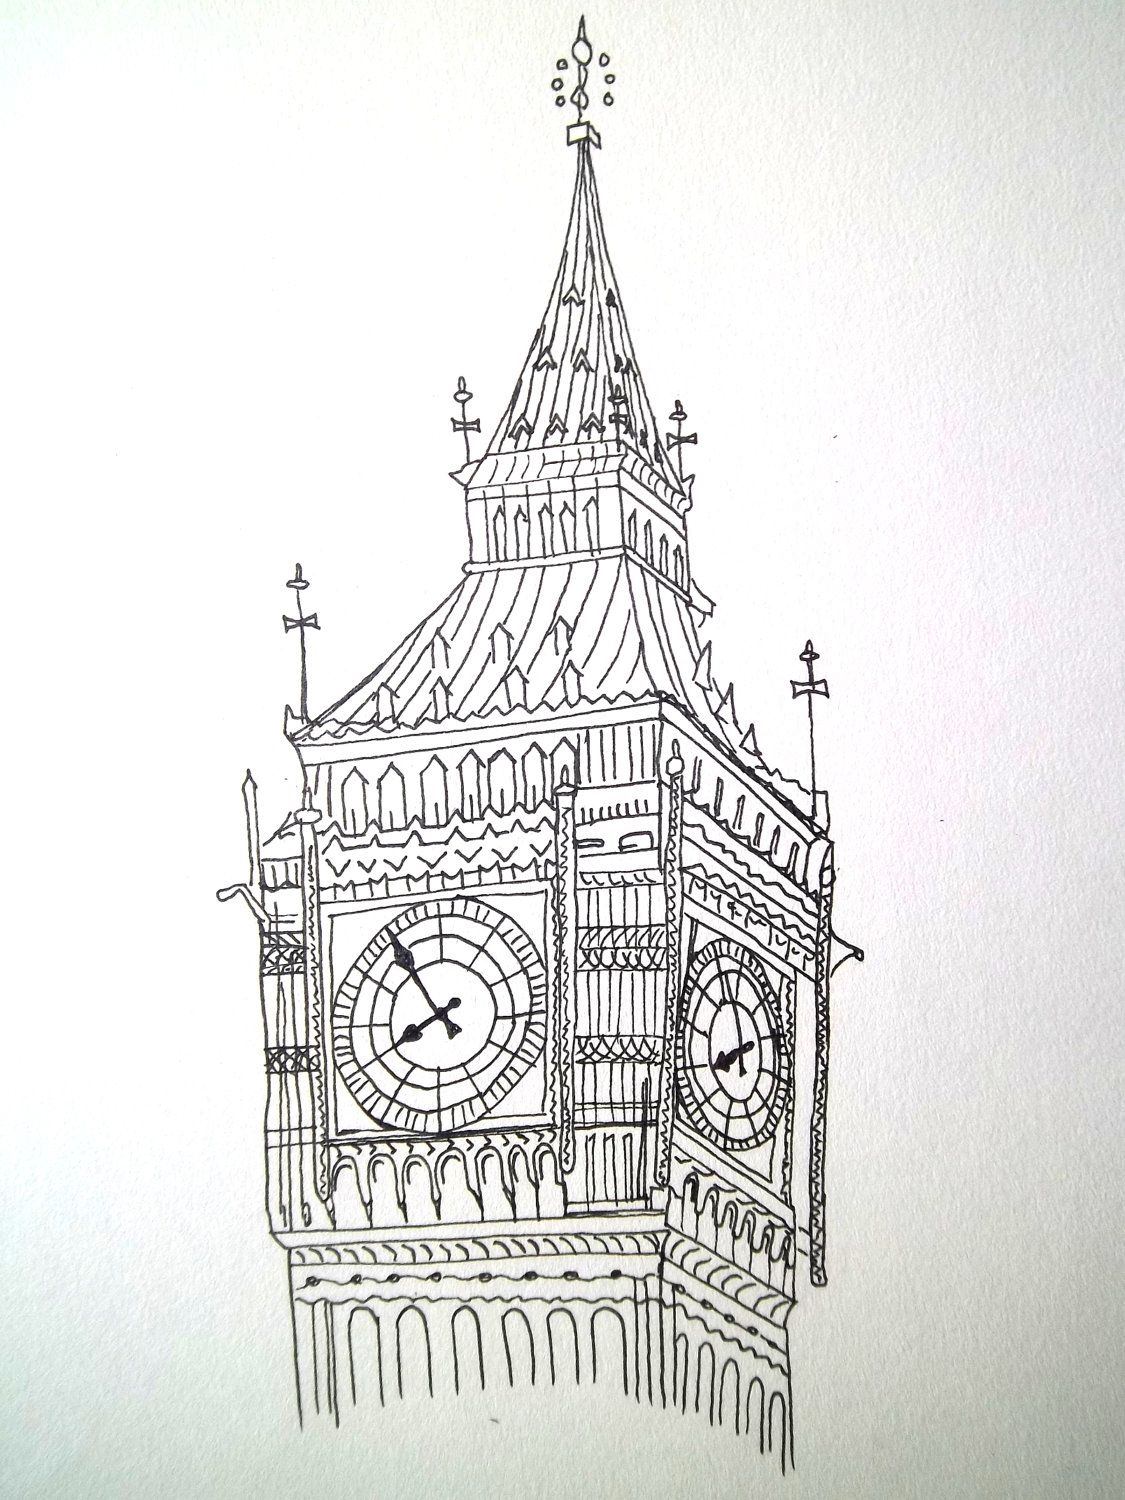 Рисунок биг. Англия Биг Бен рисунок. Часы Биг Бен для срисовки. Биг-Бен башня рисунок. Башня Биг Бен в Лондоне рисунок.